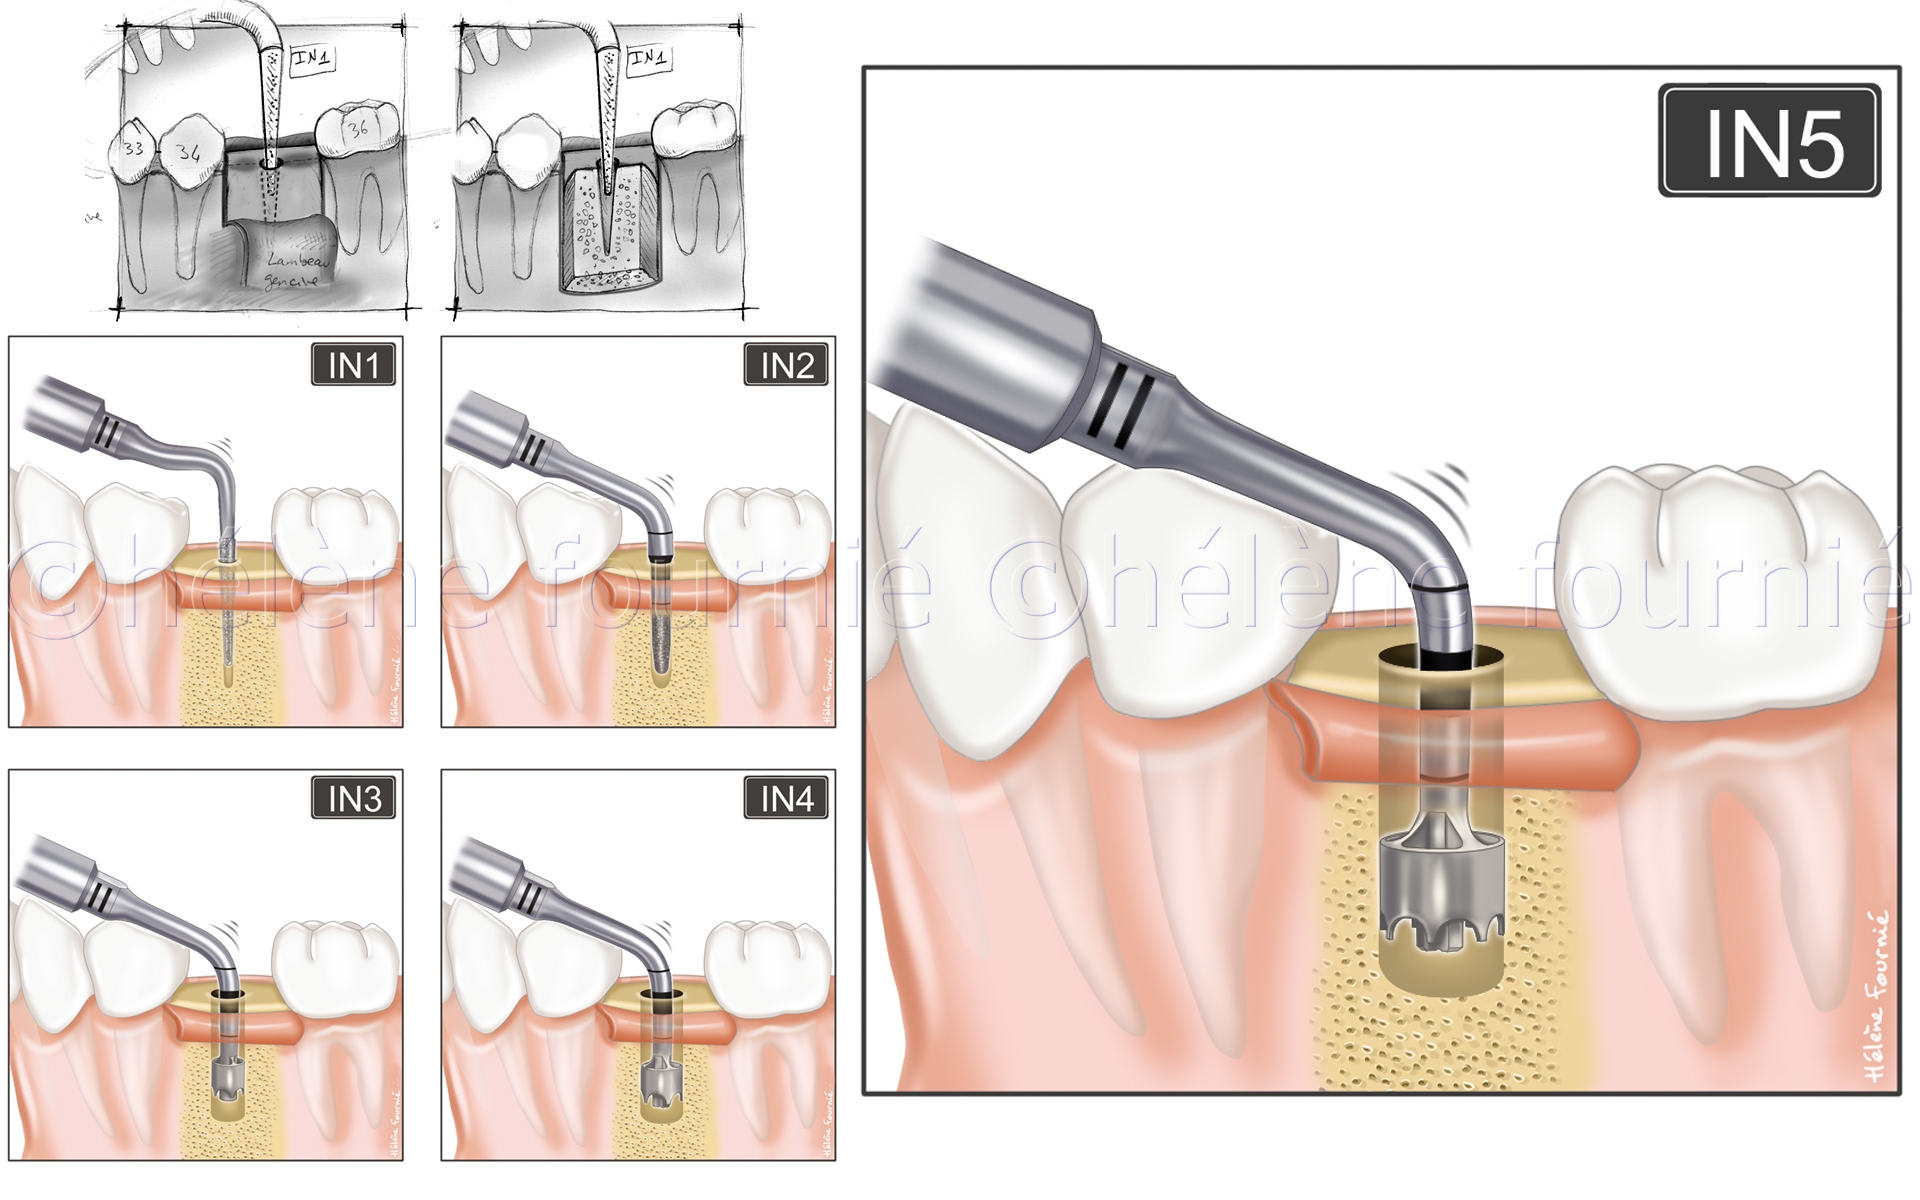  Acteon Inserts-dental-surgery